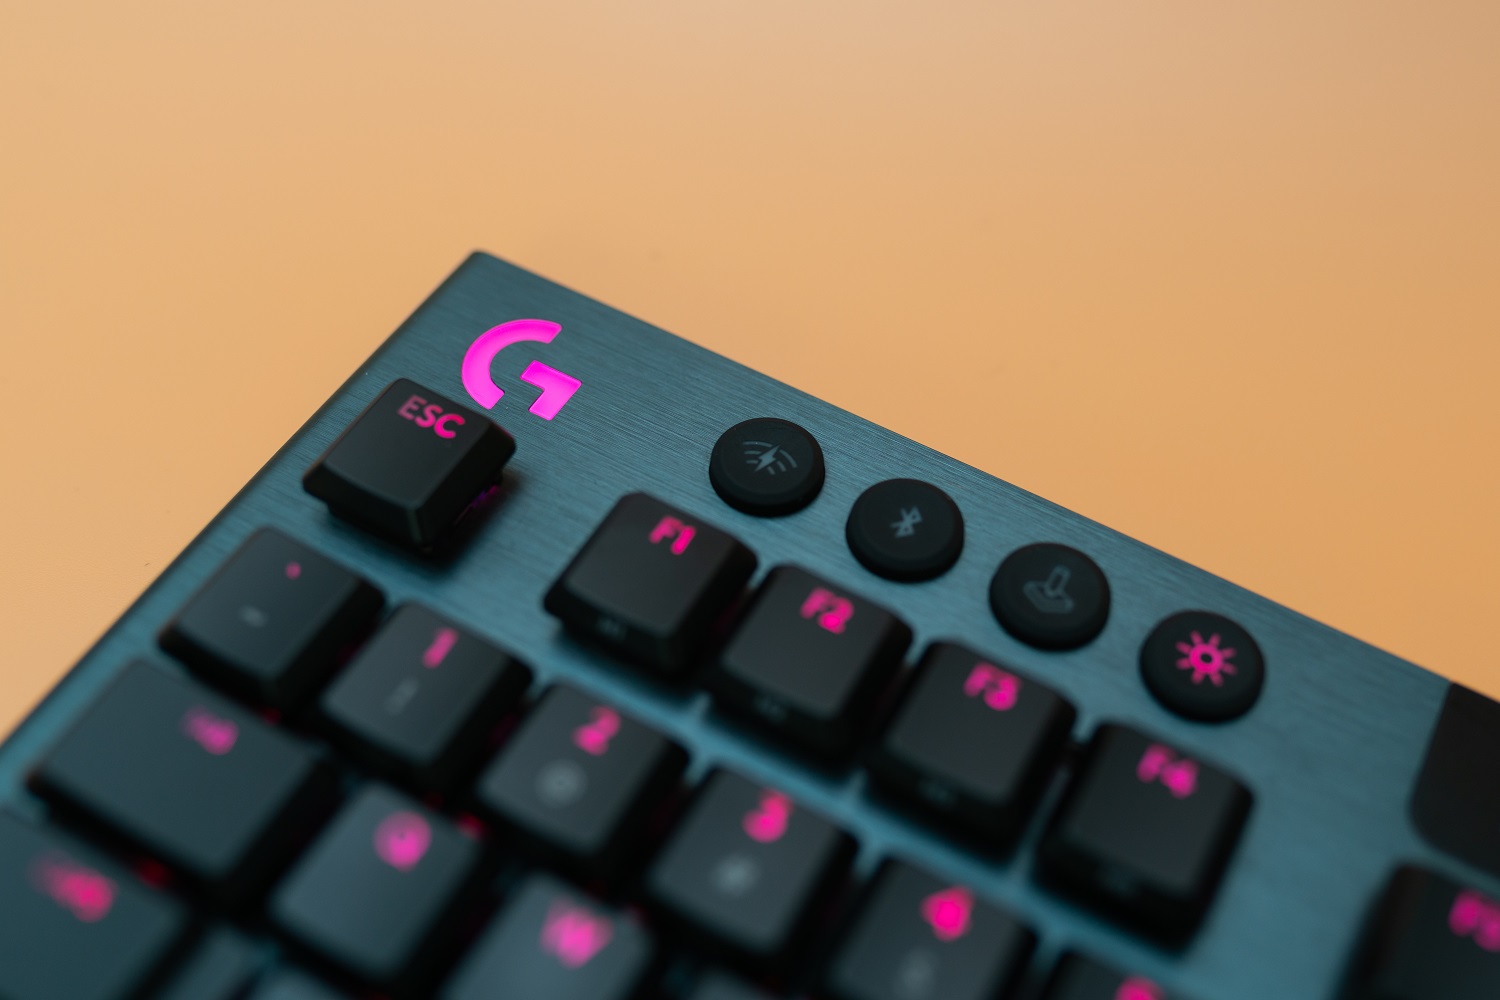 Logitech G915 TKL Review: The Gaming Magic Keyboard